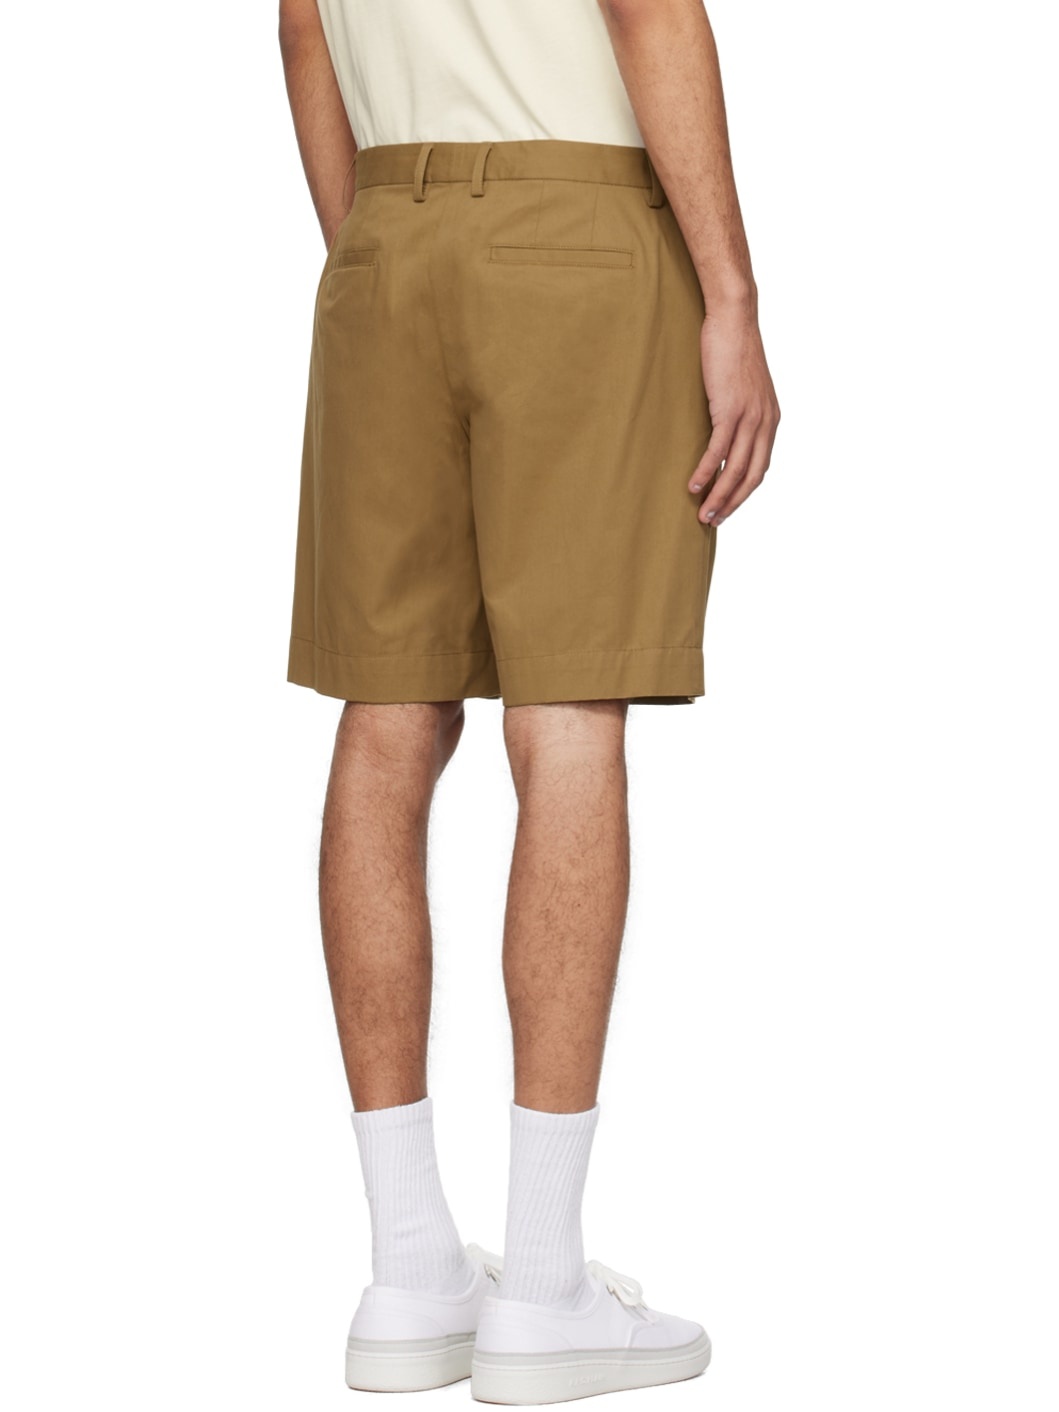 Tan Pleated Shorts - 3